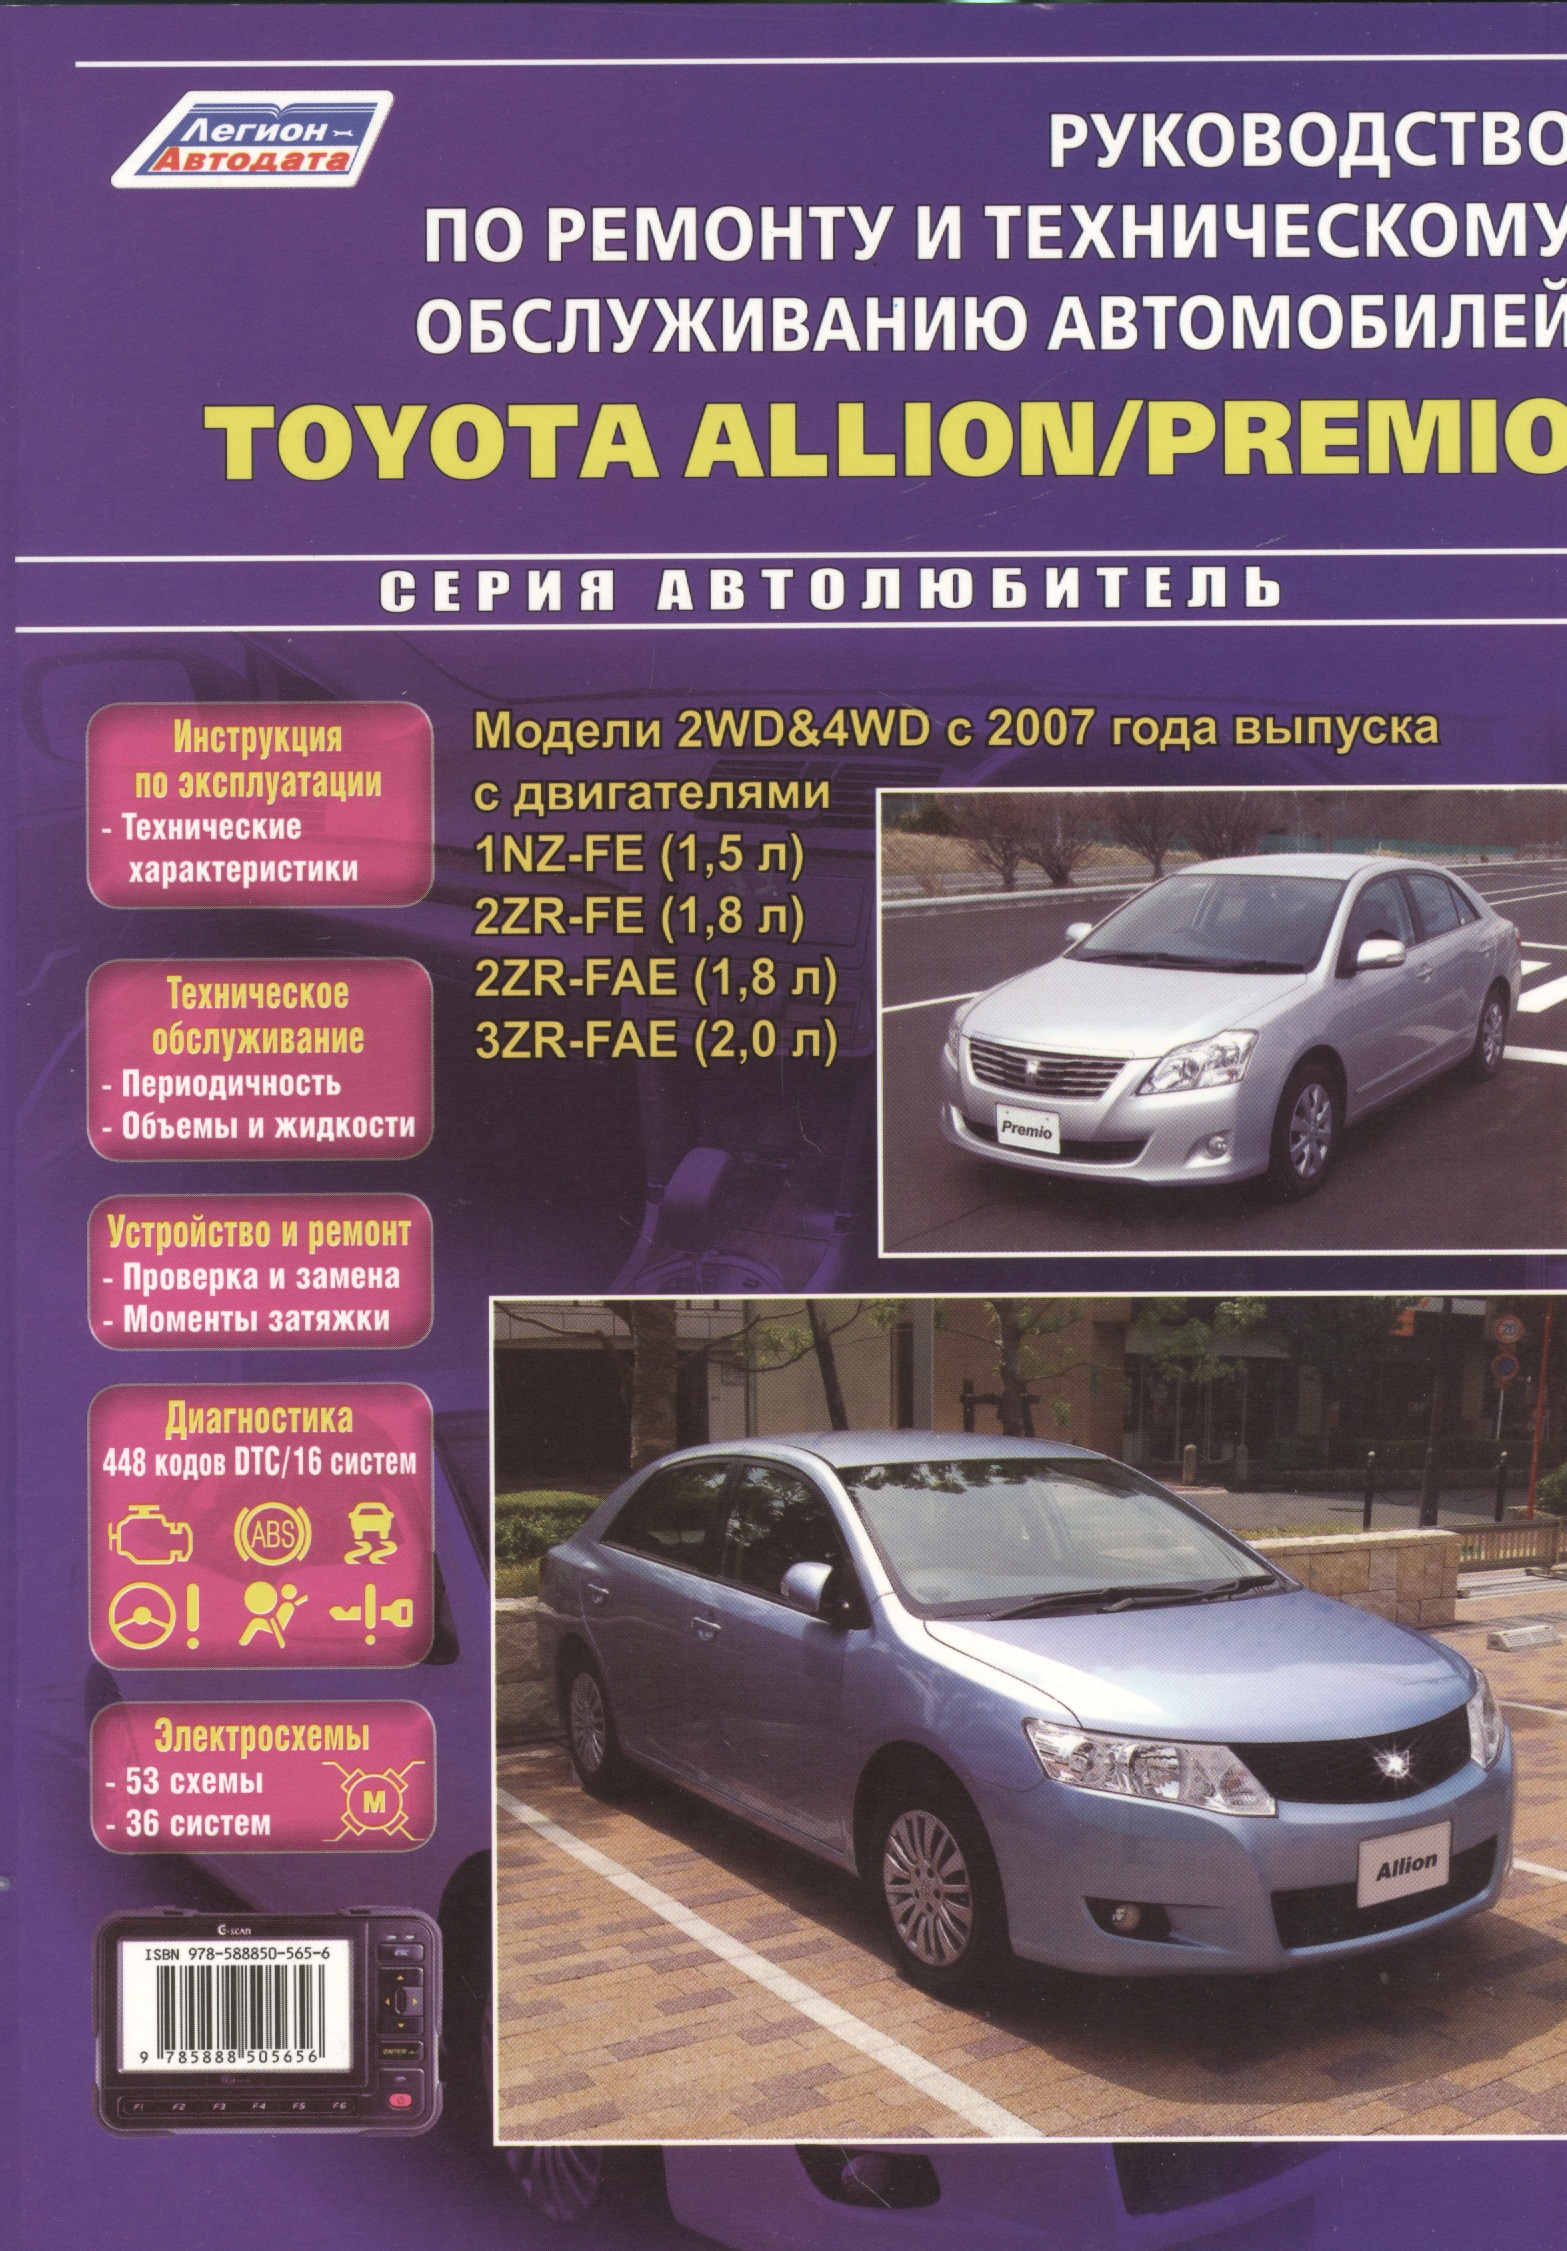 Toyota Allion Premio Модели 2WD&4WD с 2007 г. вып. с двигат. 1NZ-FE (1,5 л.) (мАвтолюбитель)